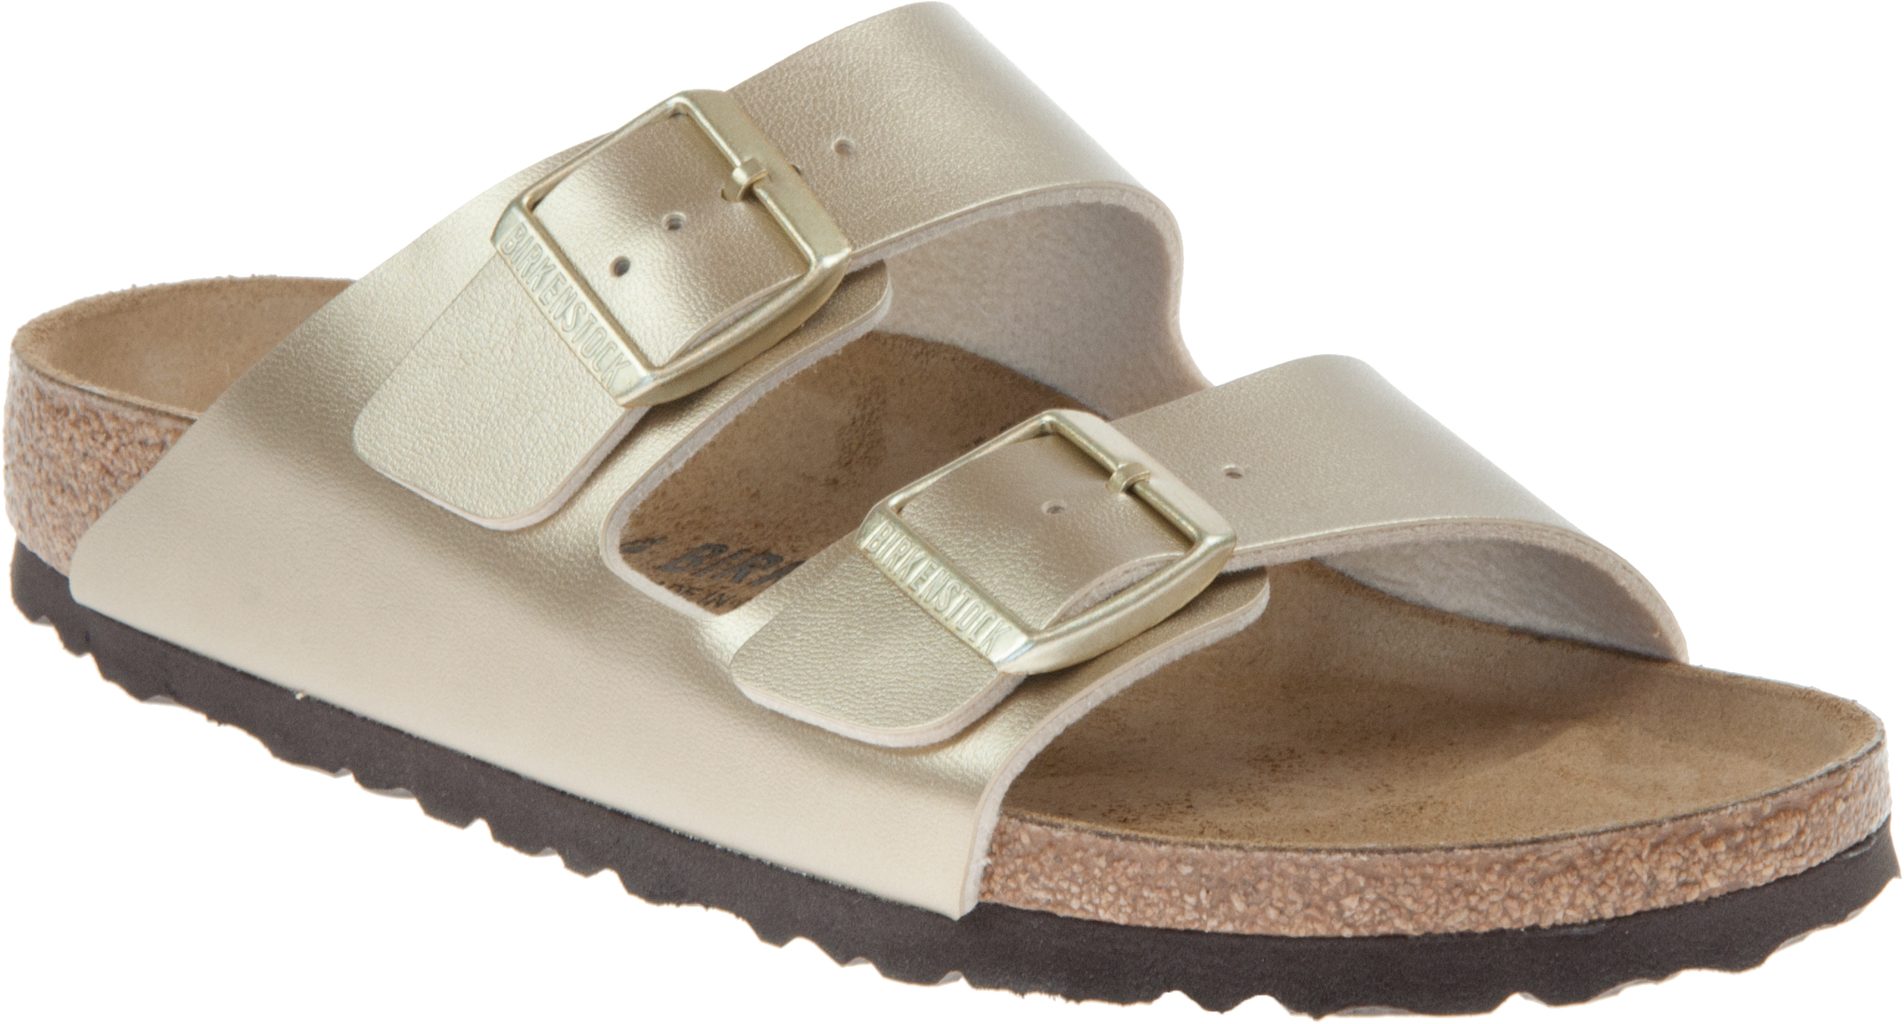 Birkenstock Arizona Gold 1016111 - Mule Sandals - Humphries Shoes